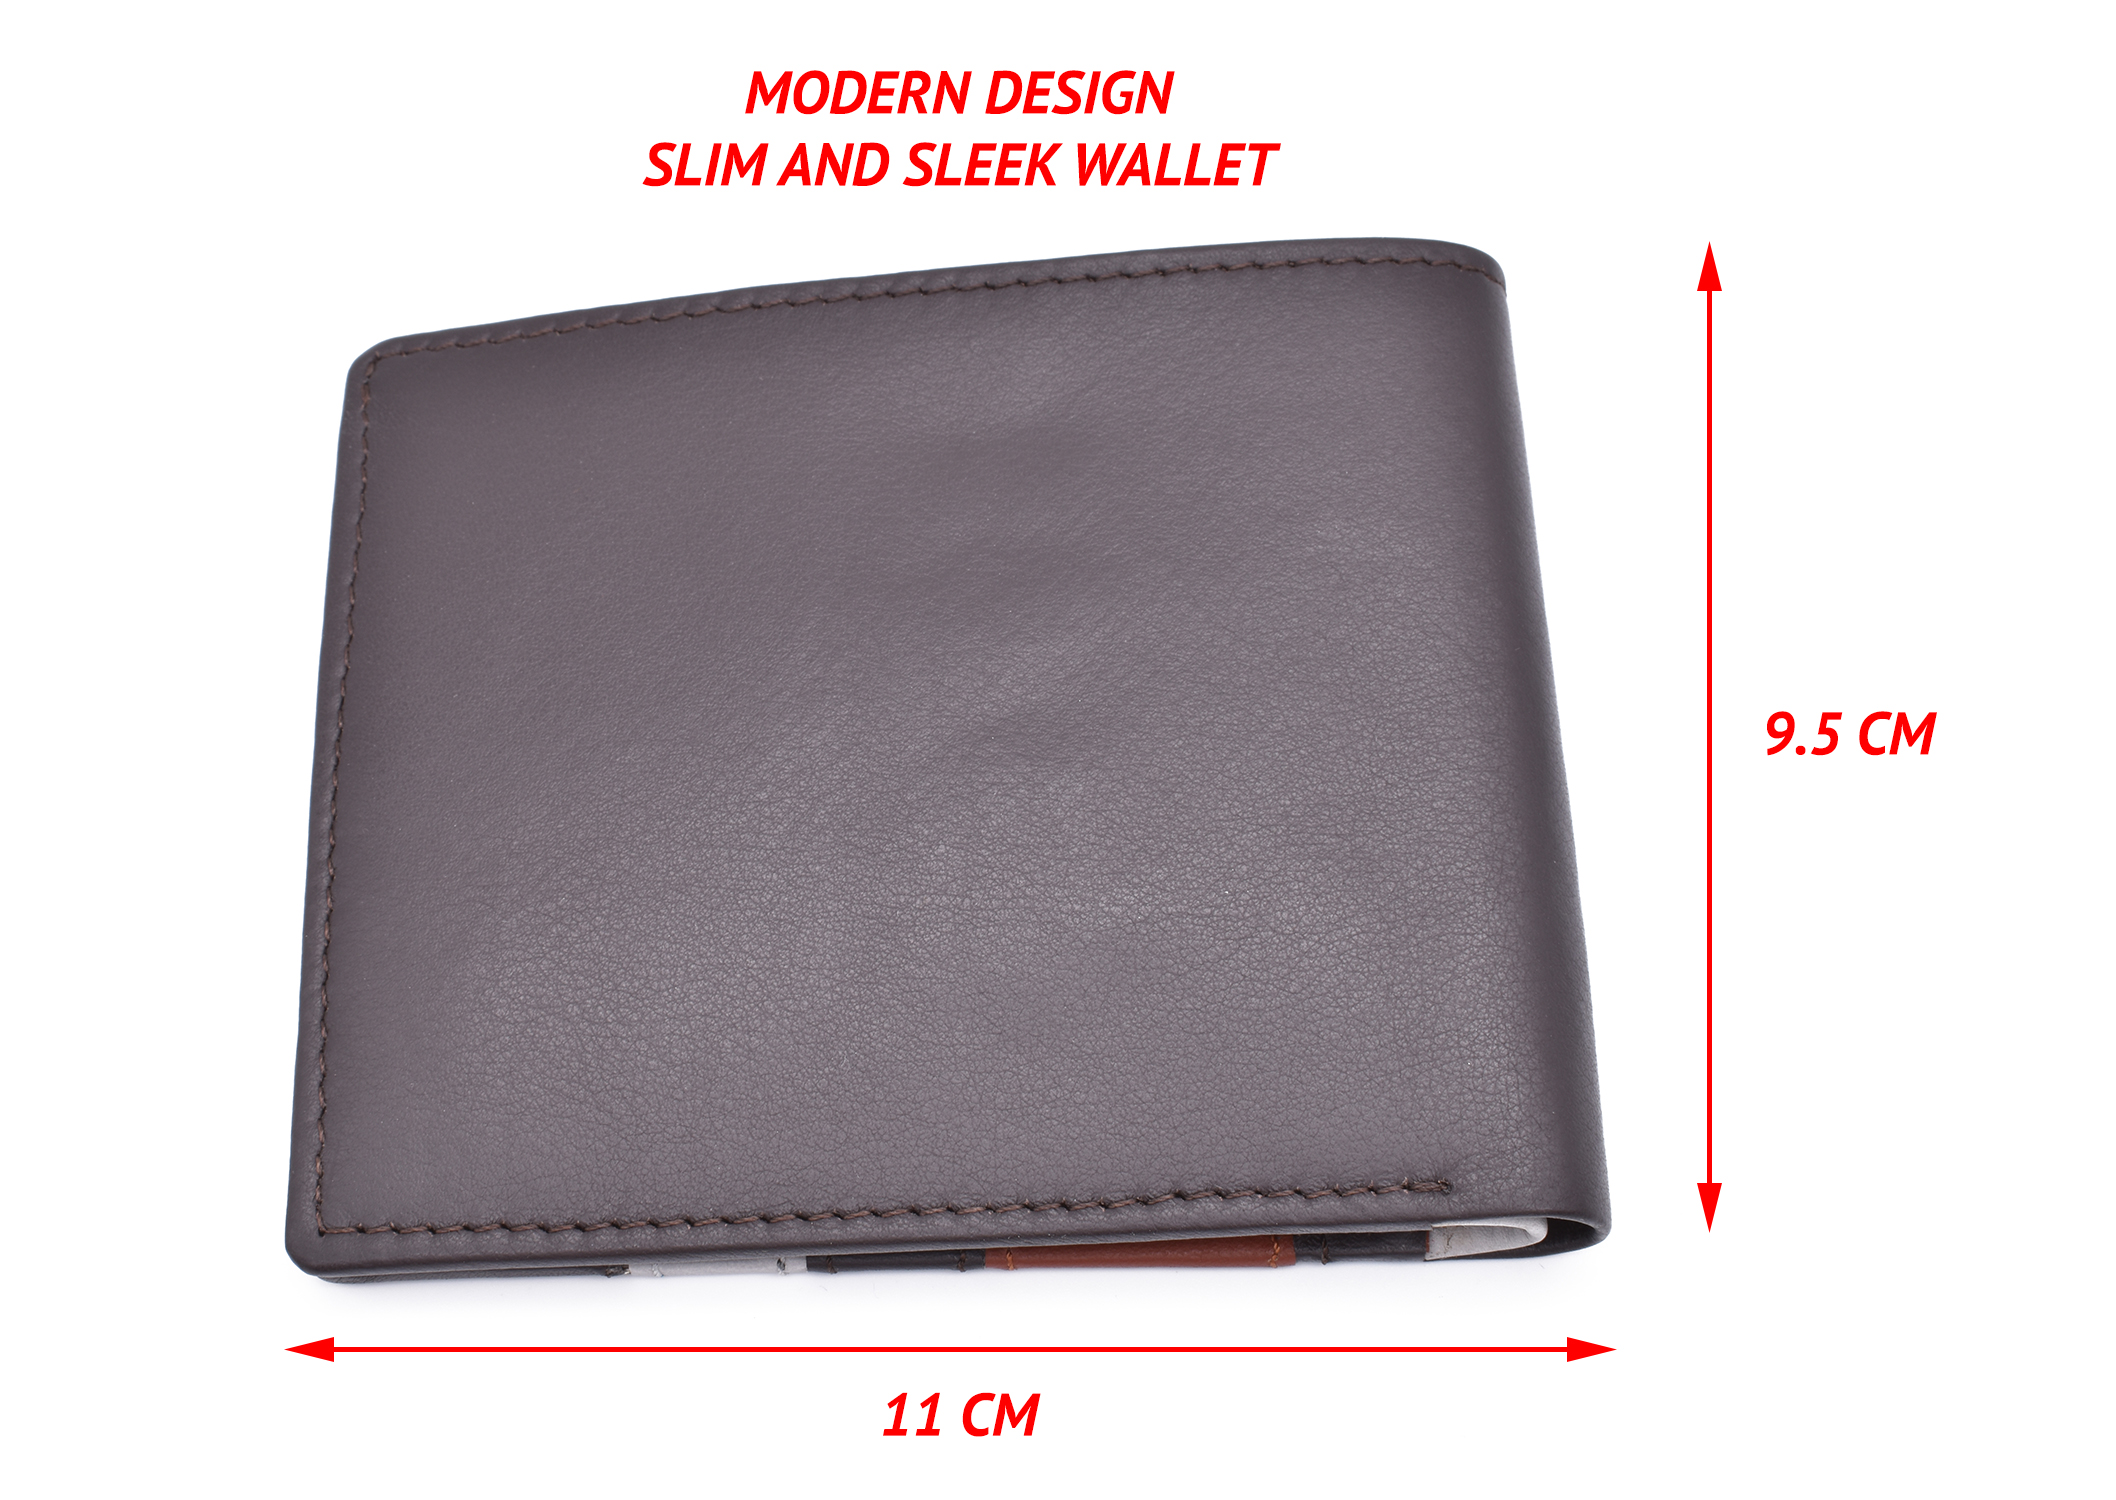 W334-Alvaro-Men's bifold wallet in genuine leather - Brown / Tan